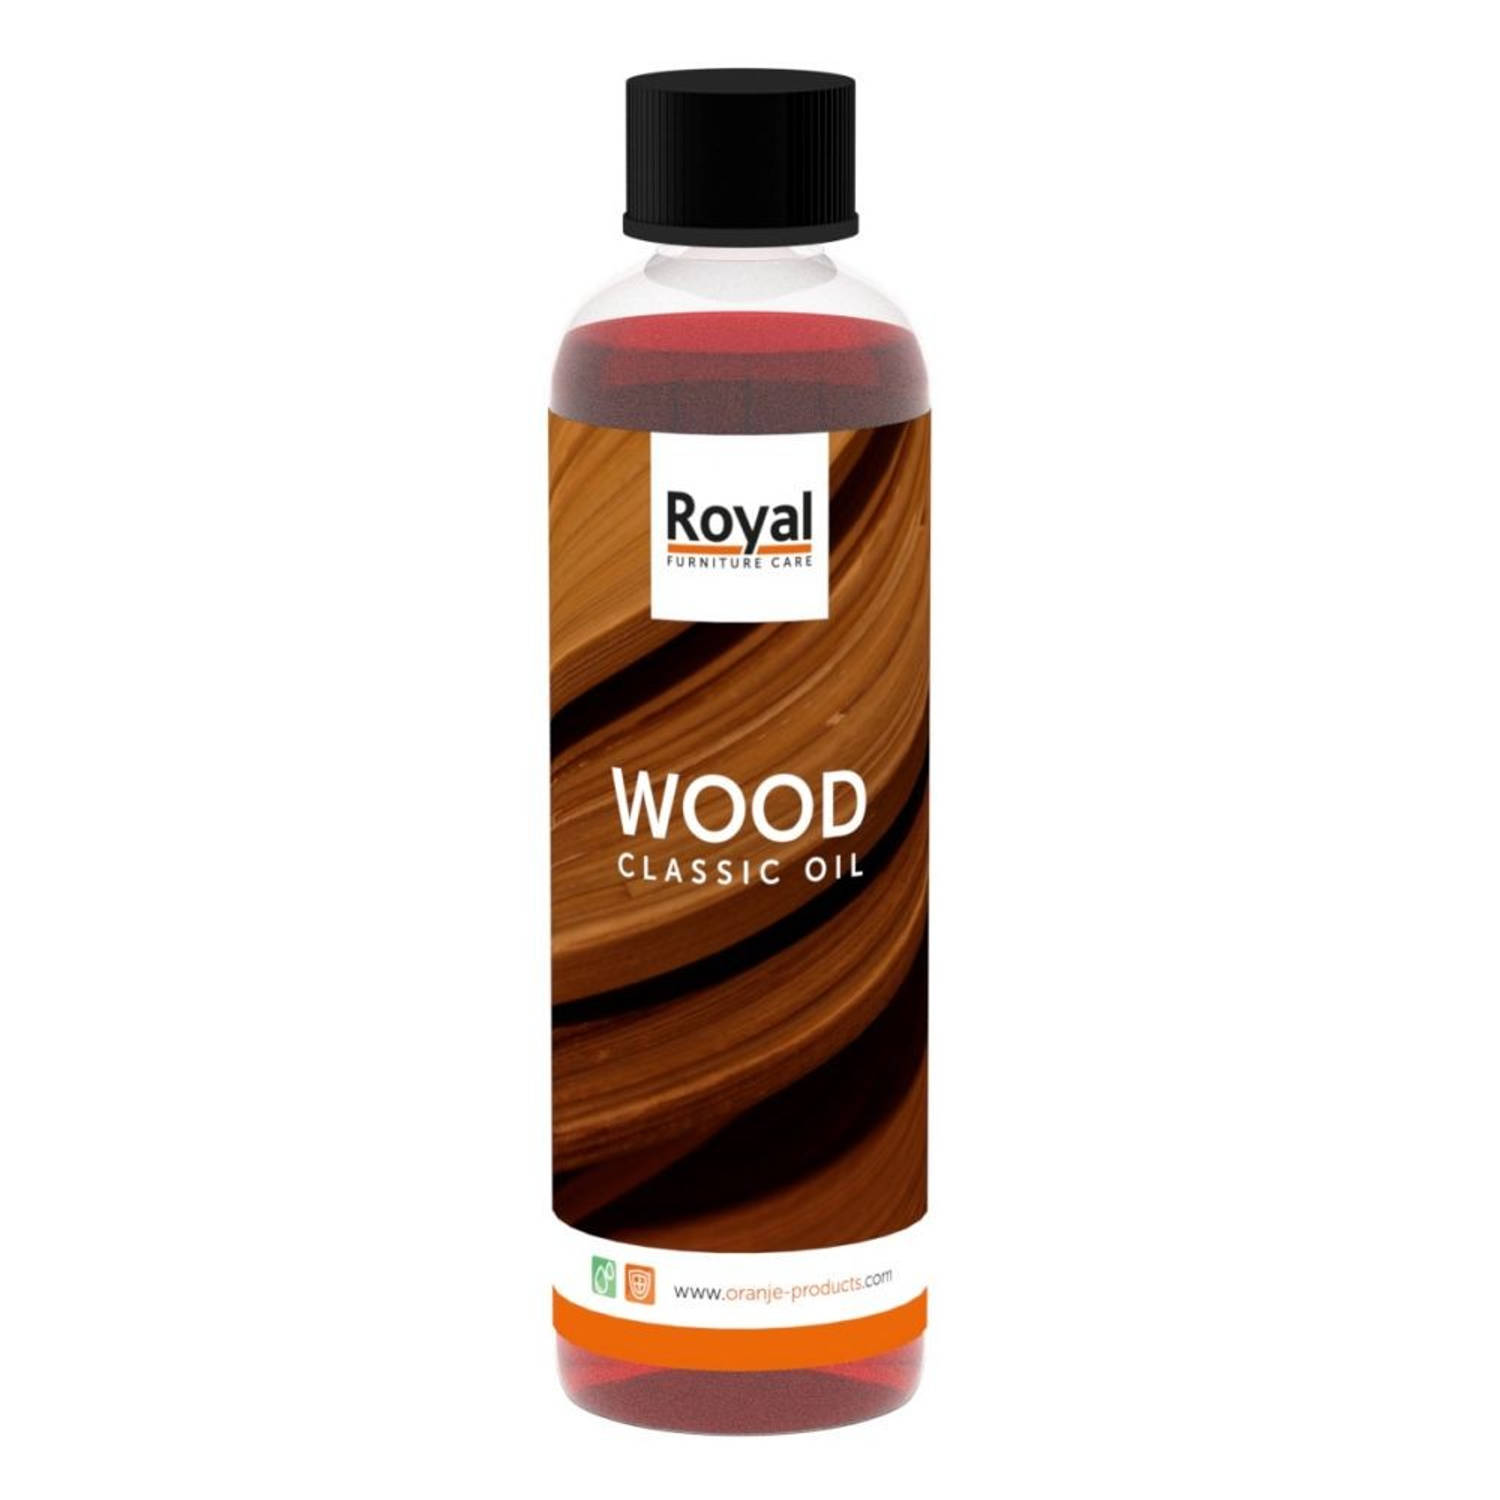 Royal Oranje Furniture Care Classic Oil Klassiek - Rood